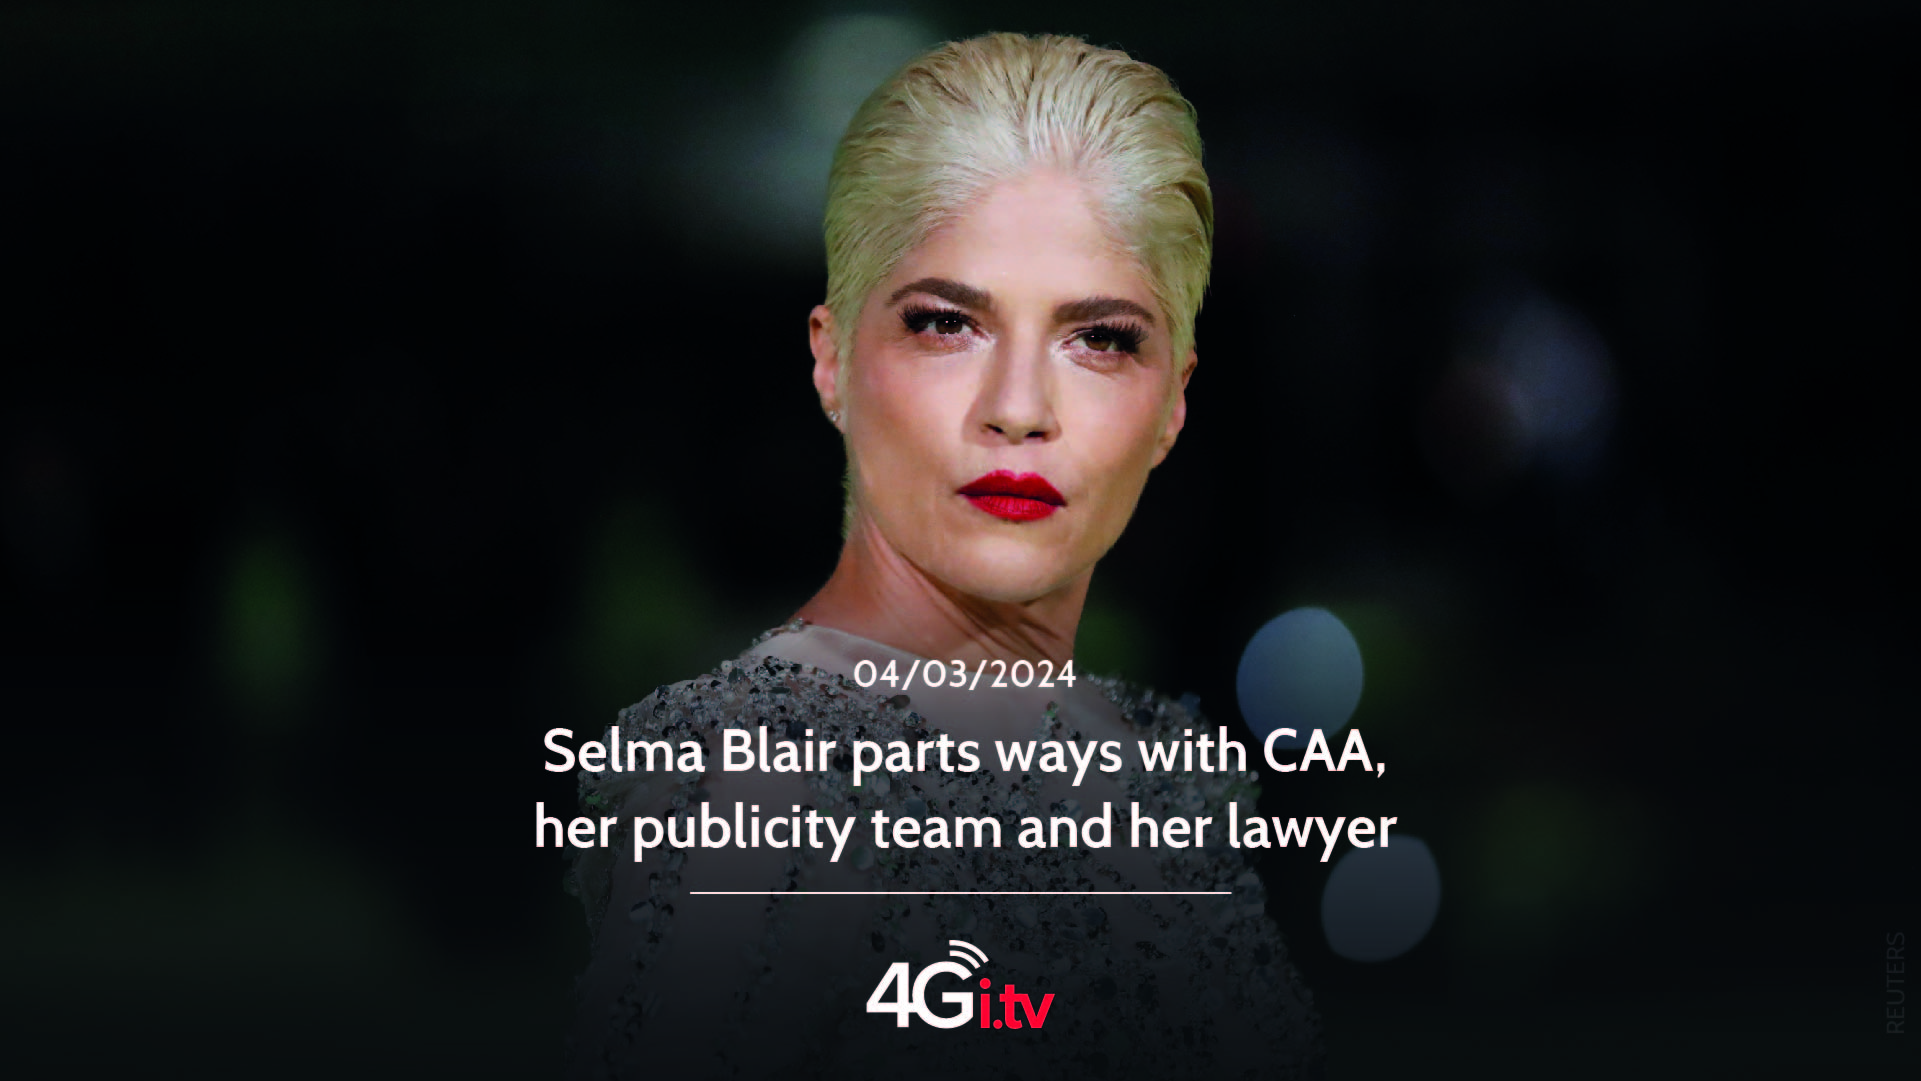 Подробнее о статье Selma Blair parts ways with CAA, her publicity team and her lawyer